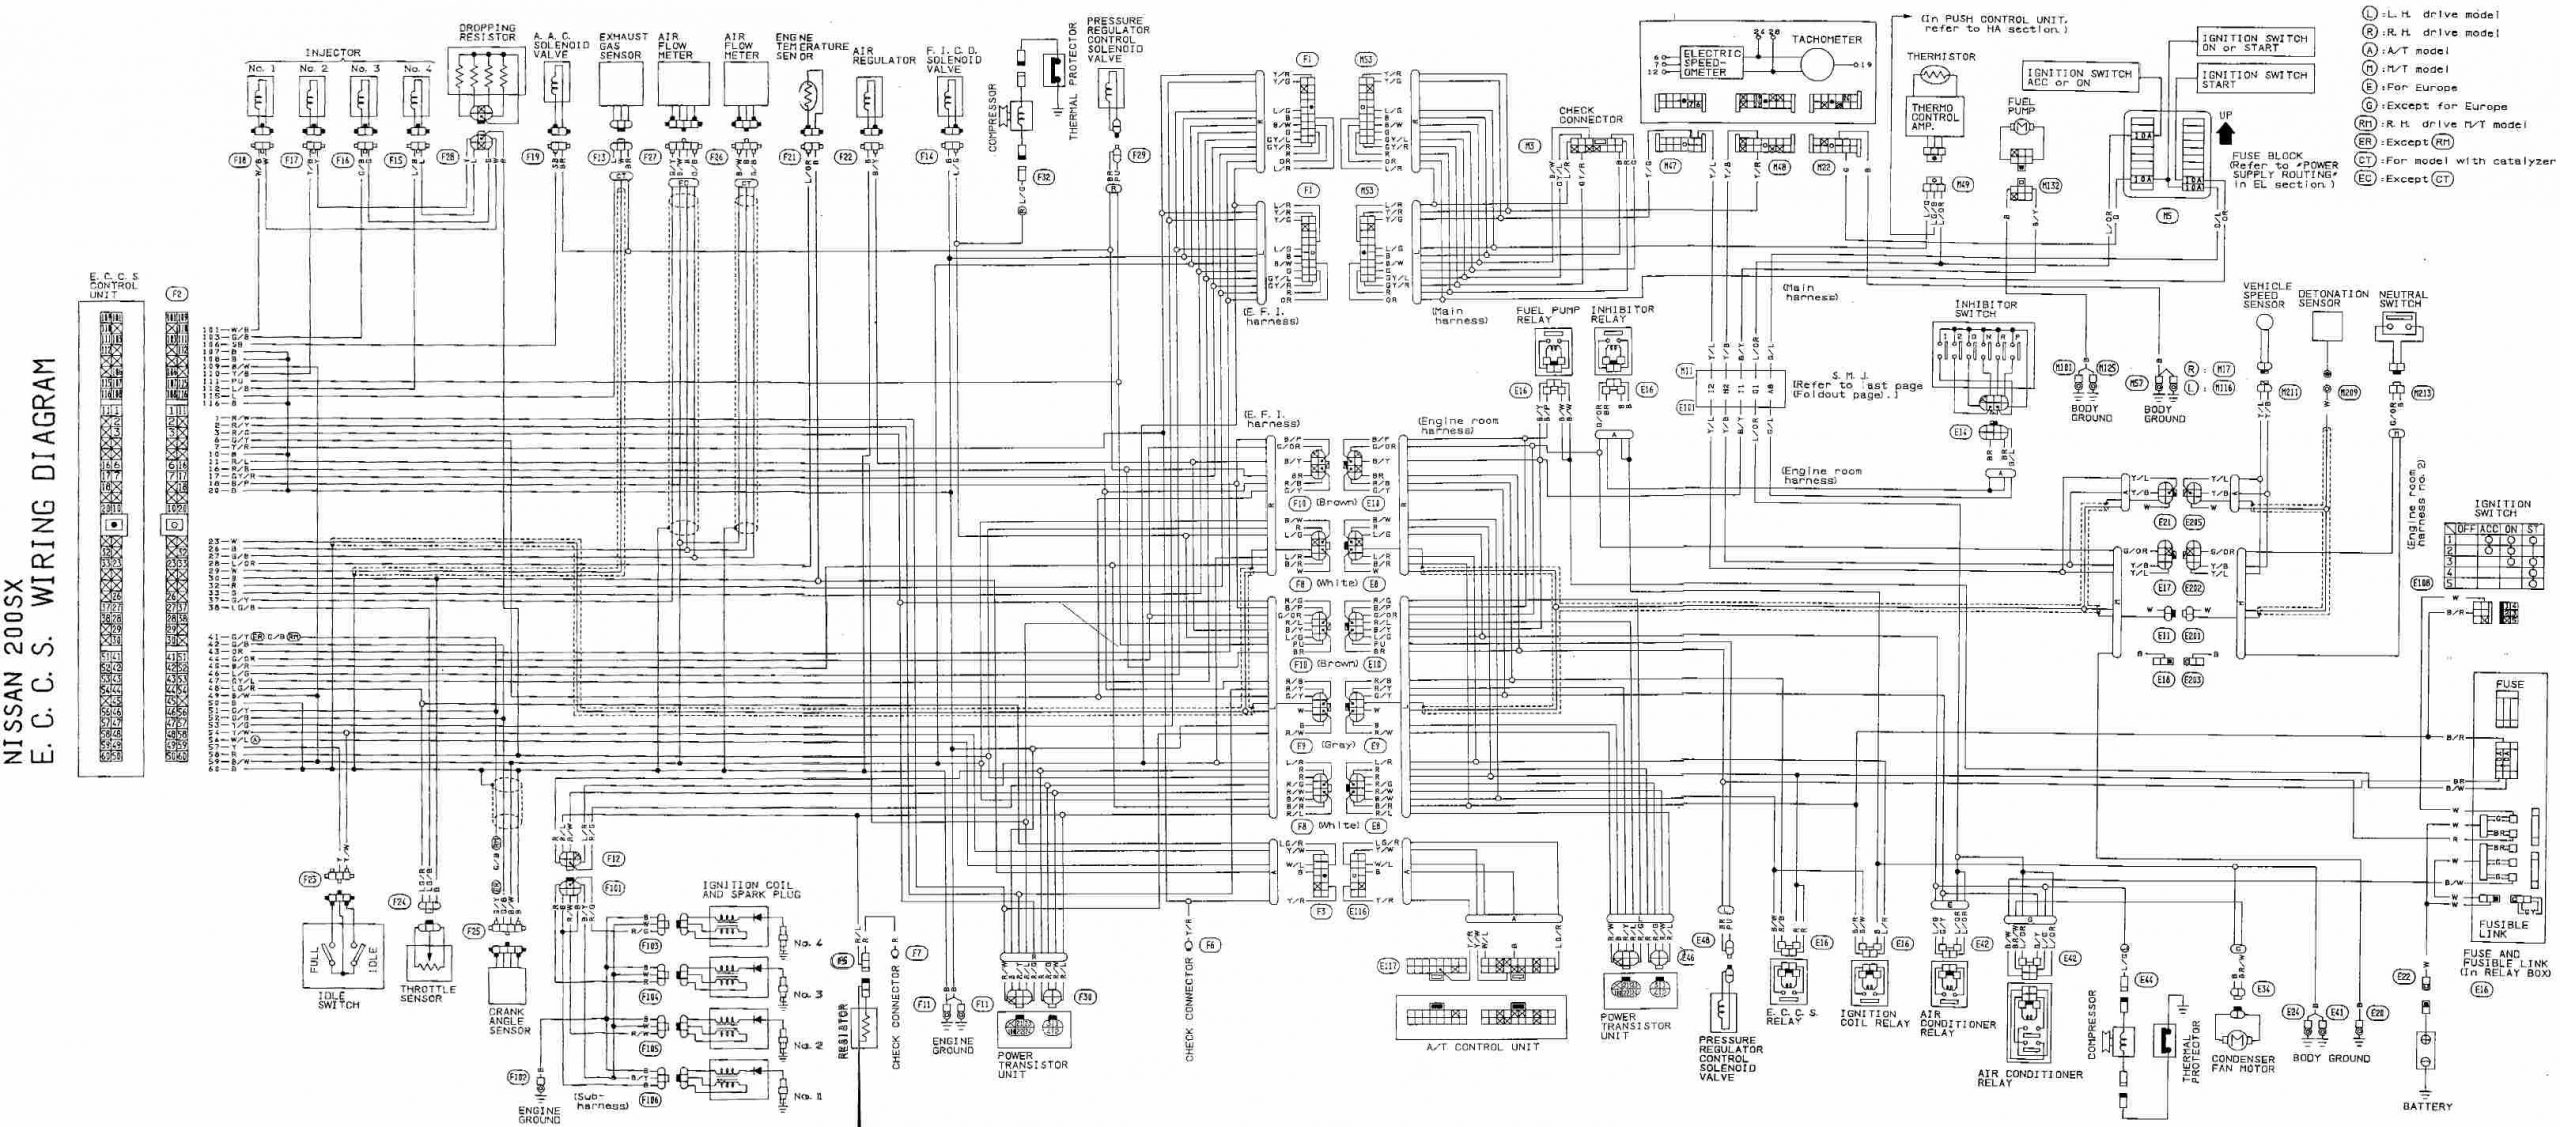 Ecm Wiring Diagram 2002 Xterra Nissan – Car Pdf Manual, Wiring Diagram & Fault Codes Dtc Of Ecm Wiring Diagram 2002 Xterra